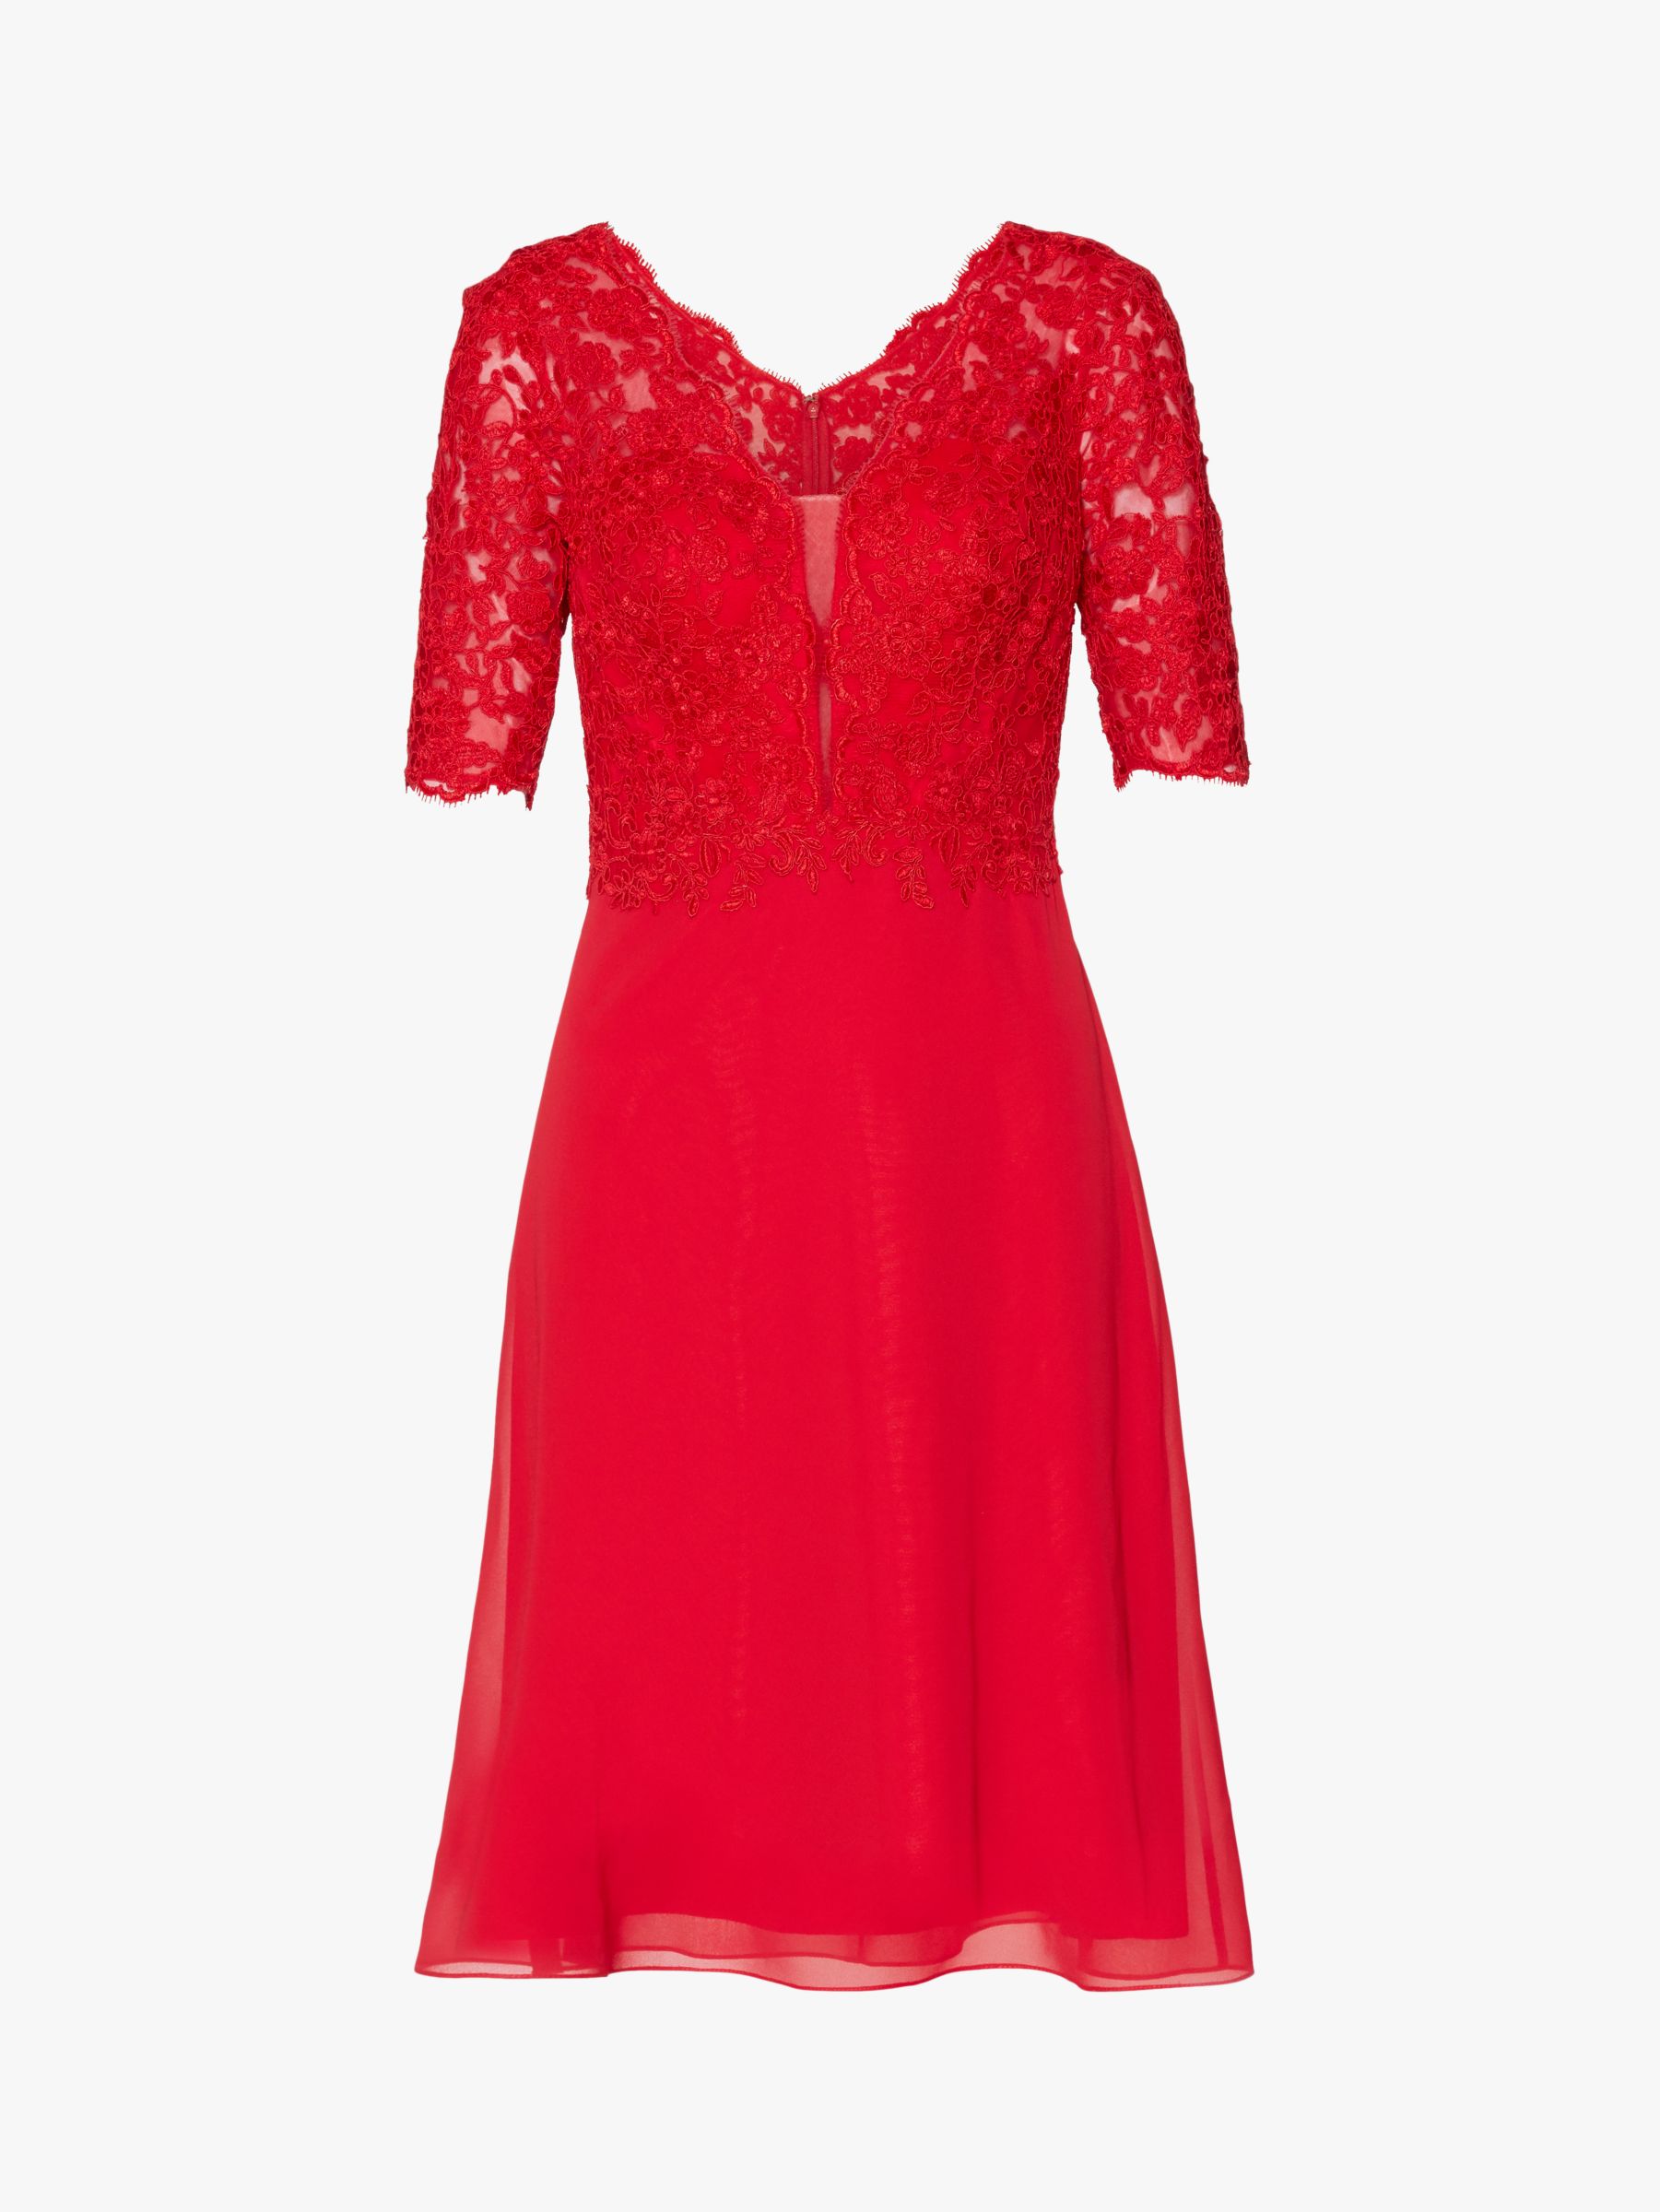 Buy Gina Bacconi Fantasia Lace Bodice Dress Online at johnlewis.com